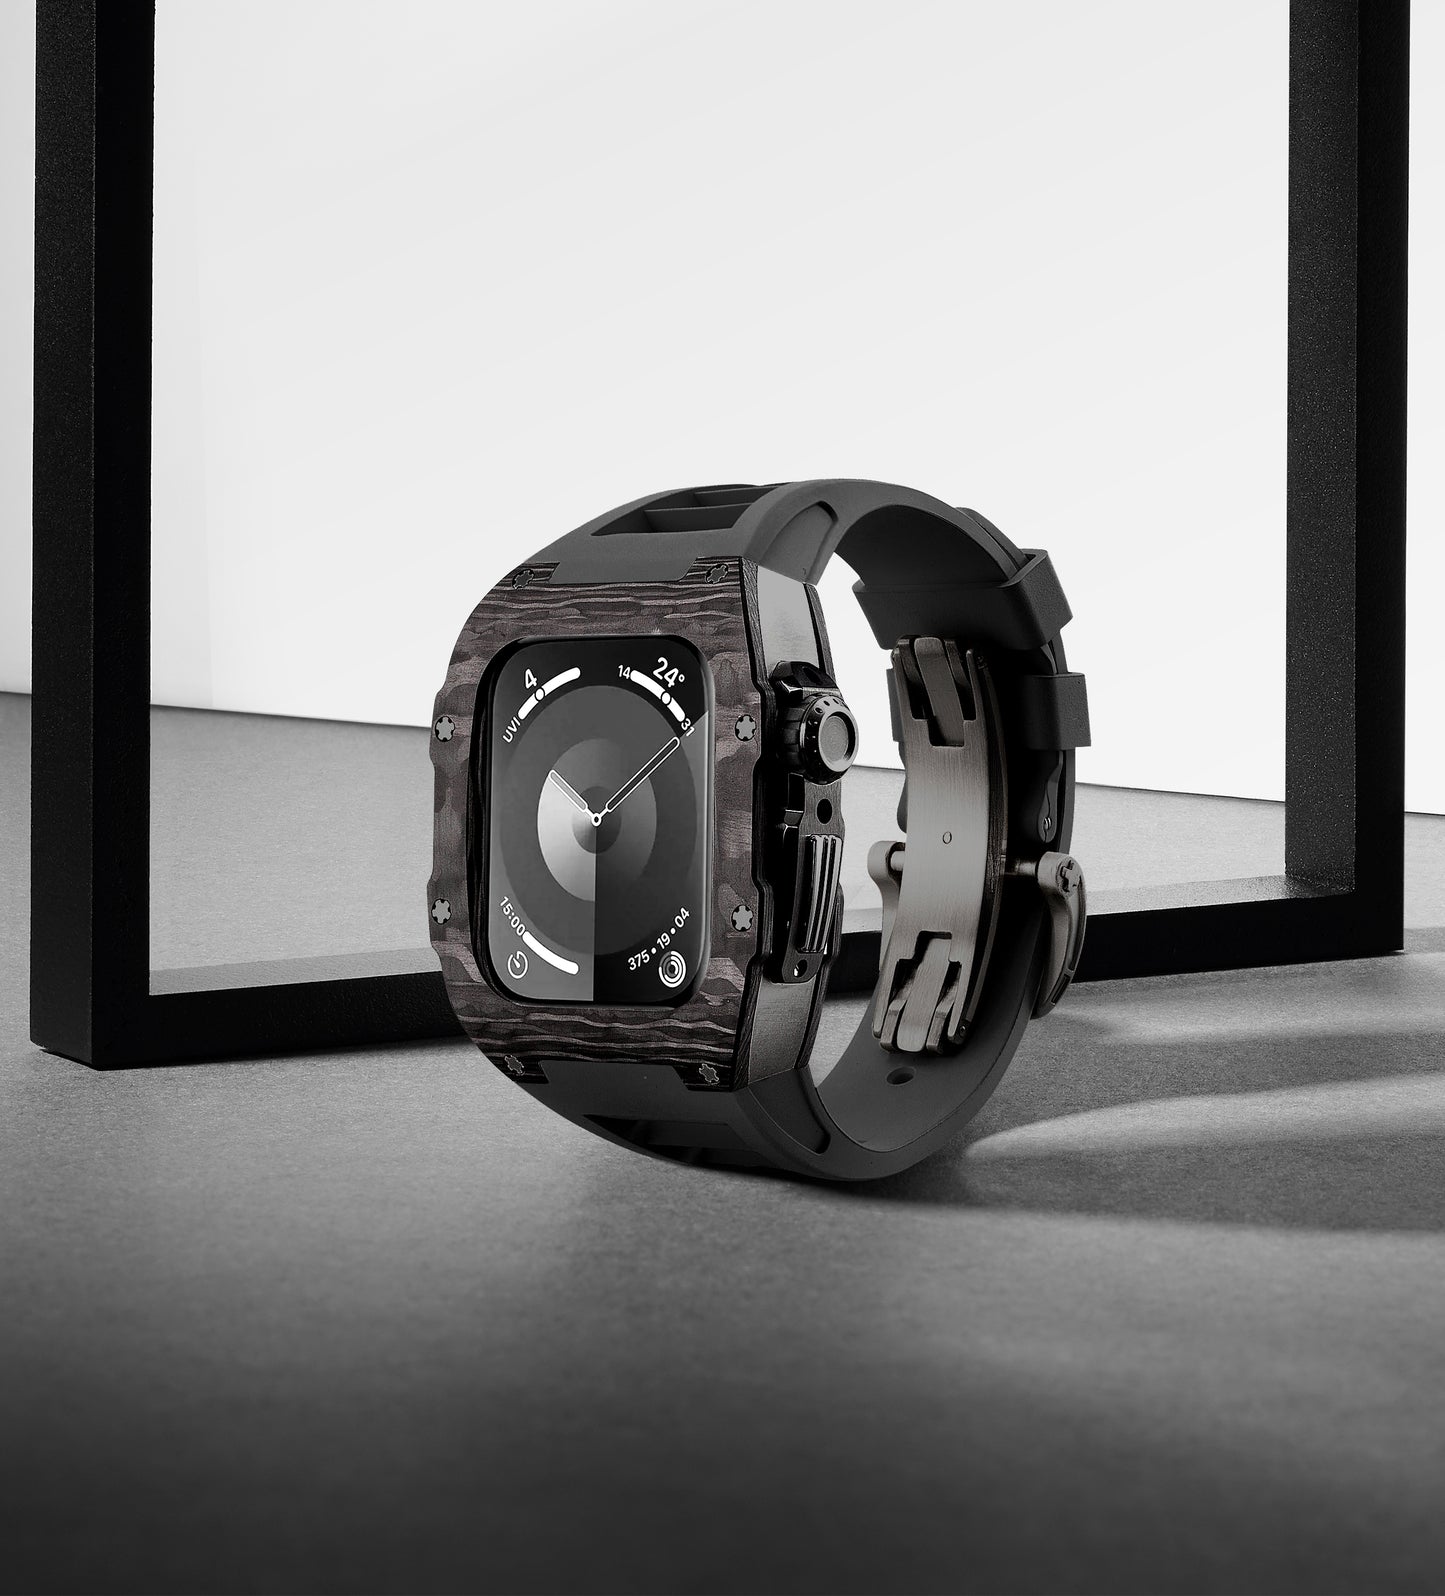 Apple Watch Case 44mm - Carbon Fiber Ti Rose Gold Case + Red Fluoro Strap (8 Screws)